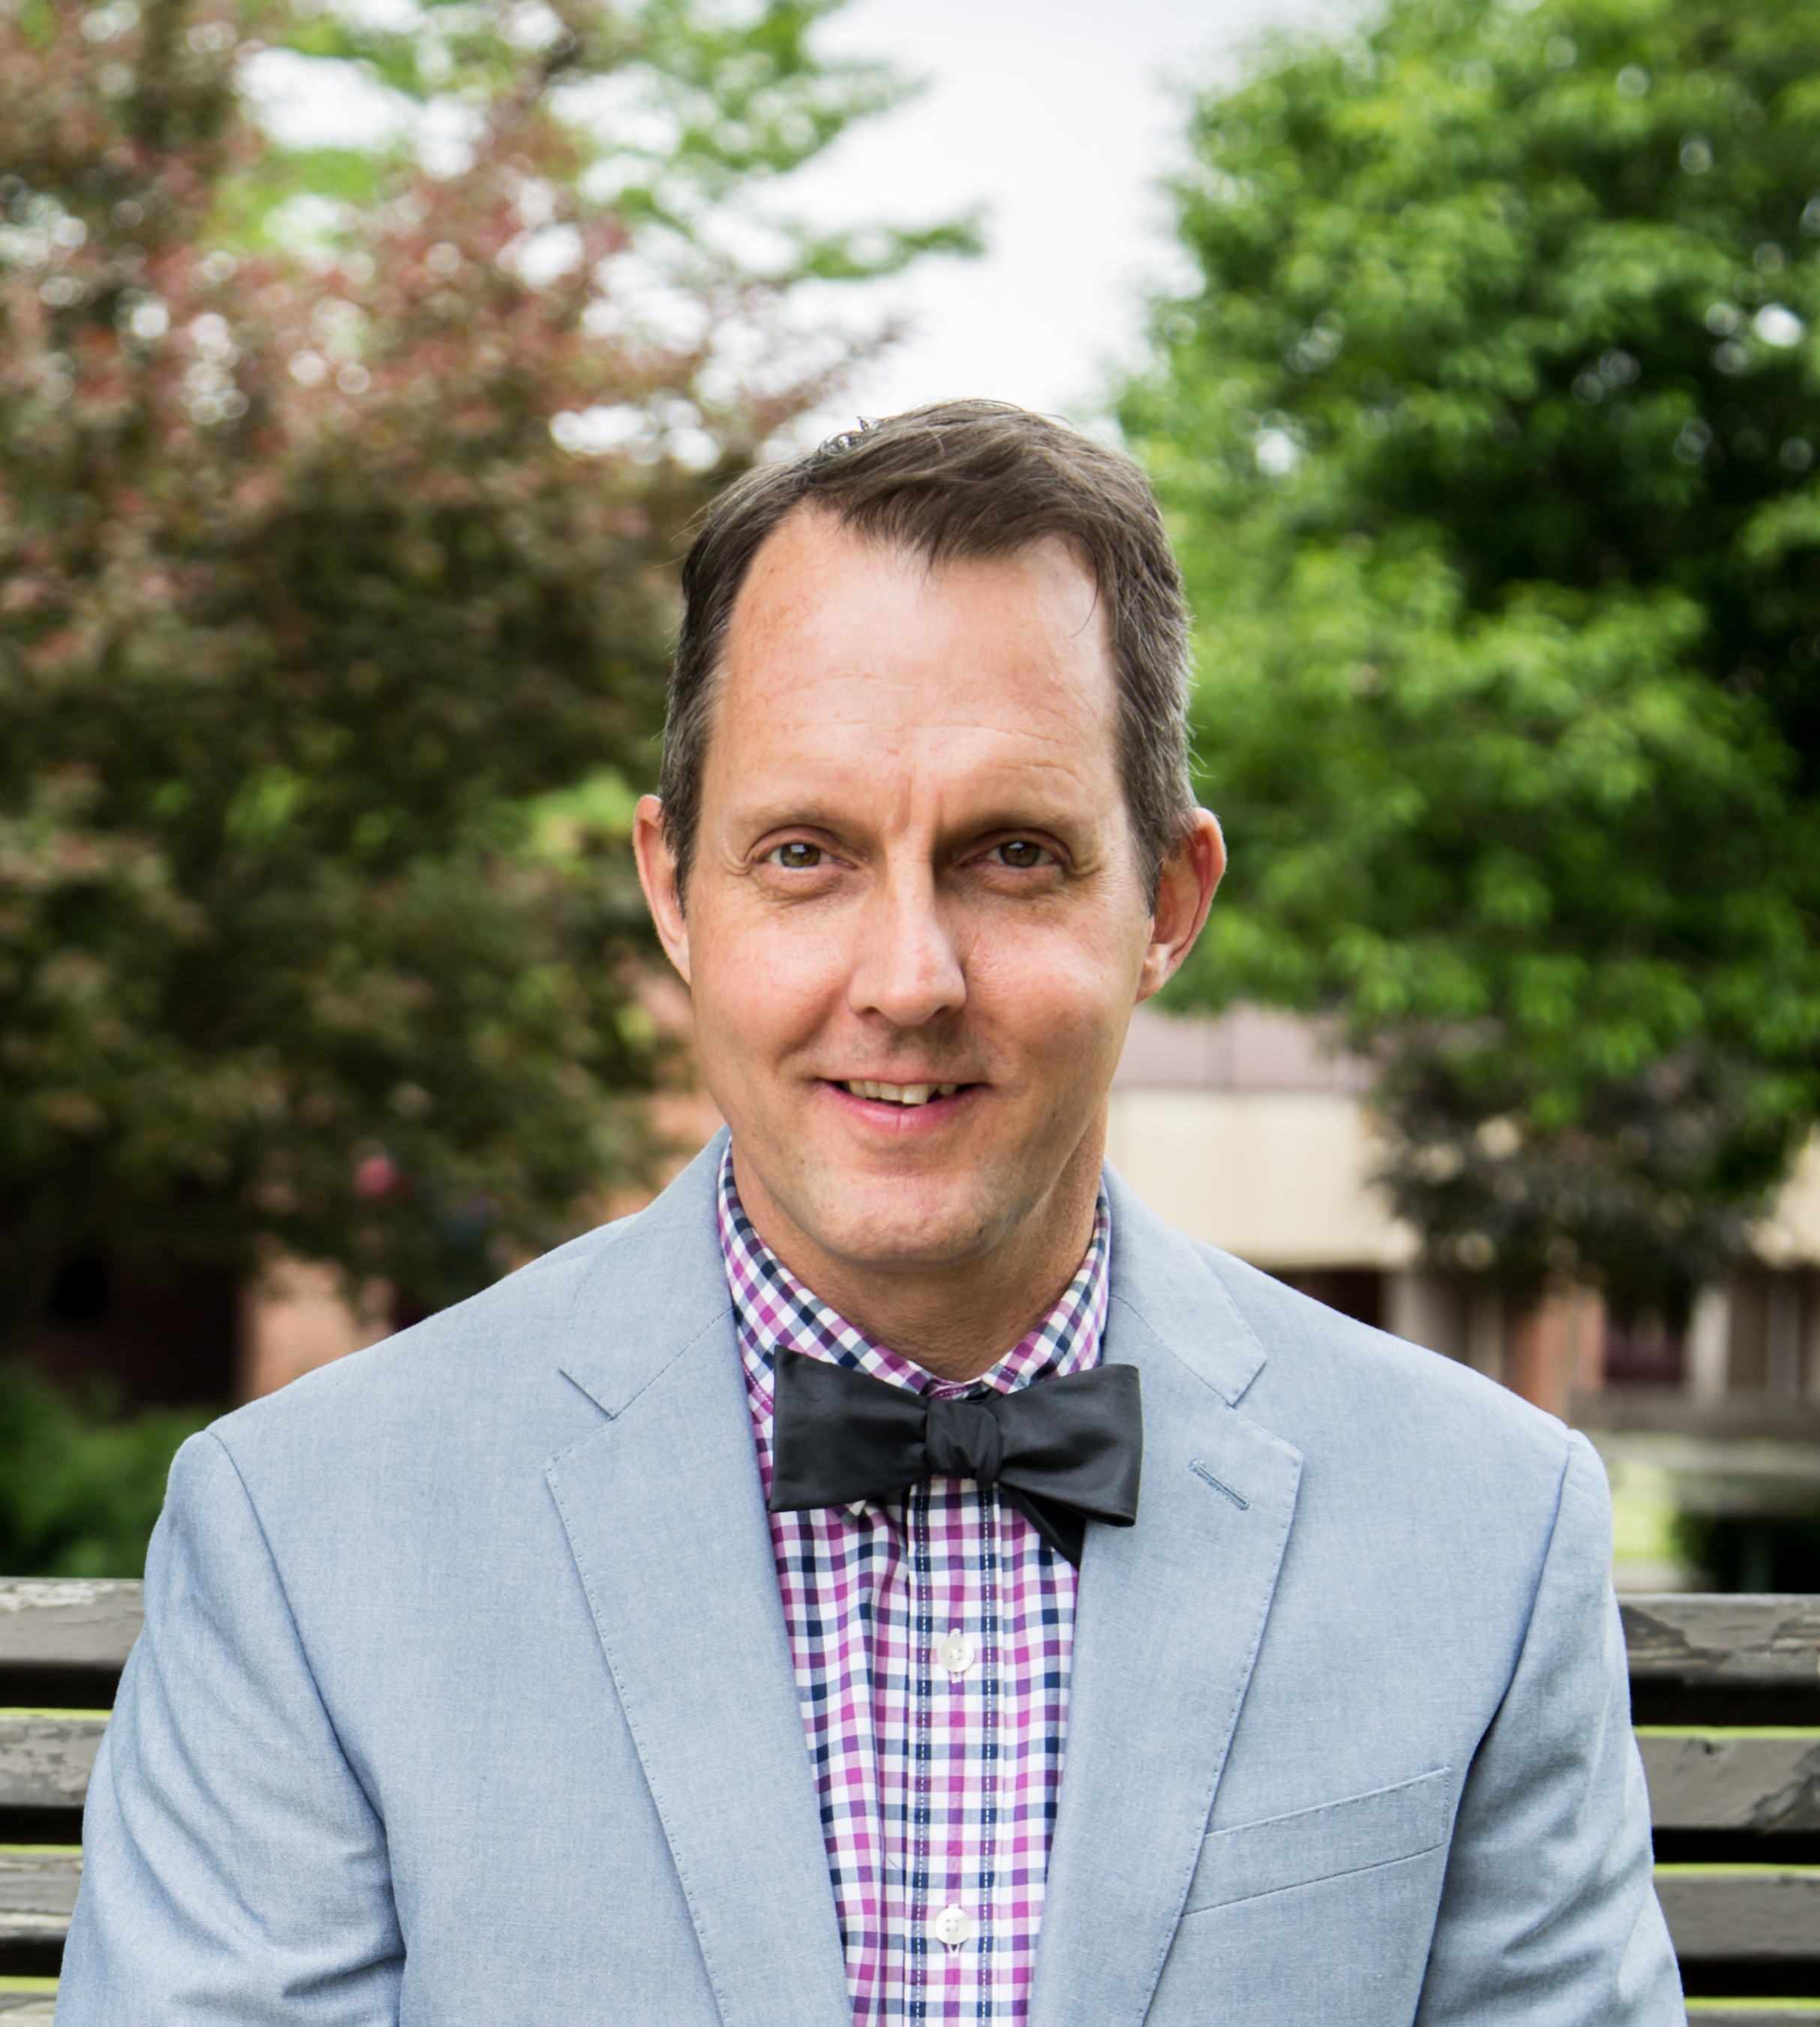 JBU Professor Dr. Kevin Simpson Receives 2018-2019 Fulbright U.S. Scholar Grant